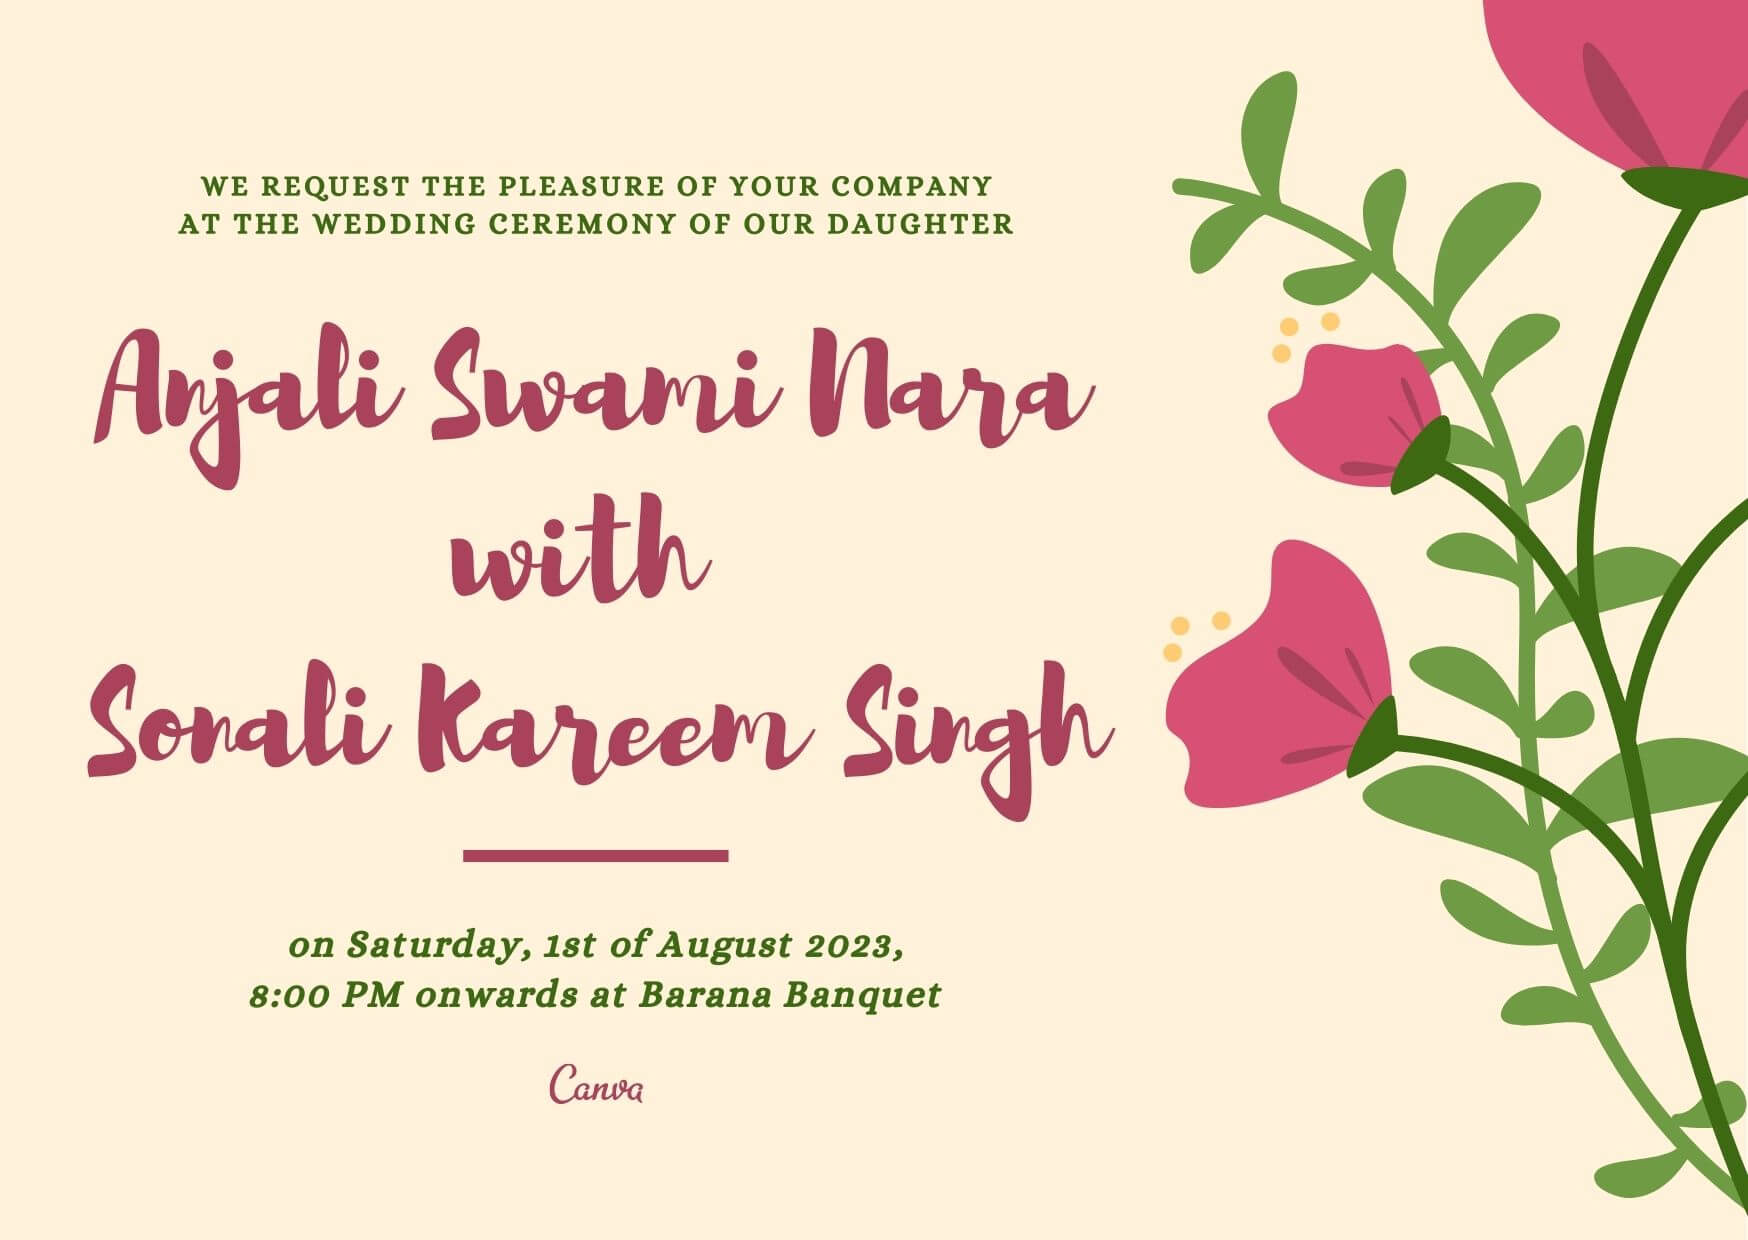 Anjali Swami Nara with Sonali Kareem Singh Marriage Invitation Format